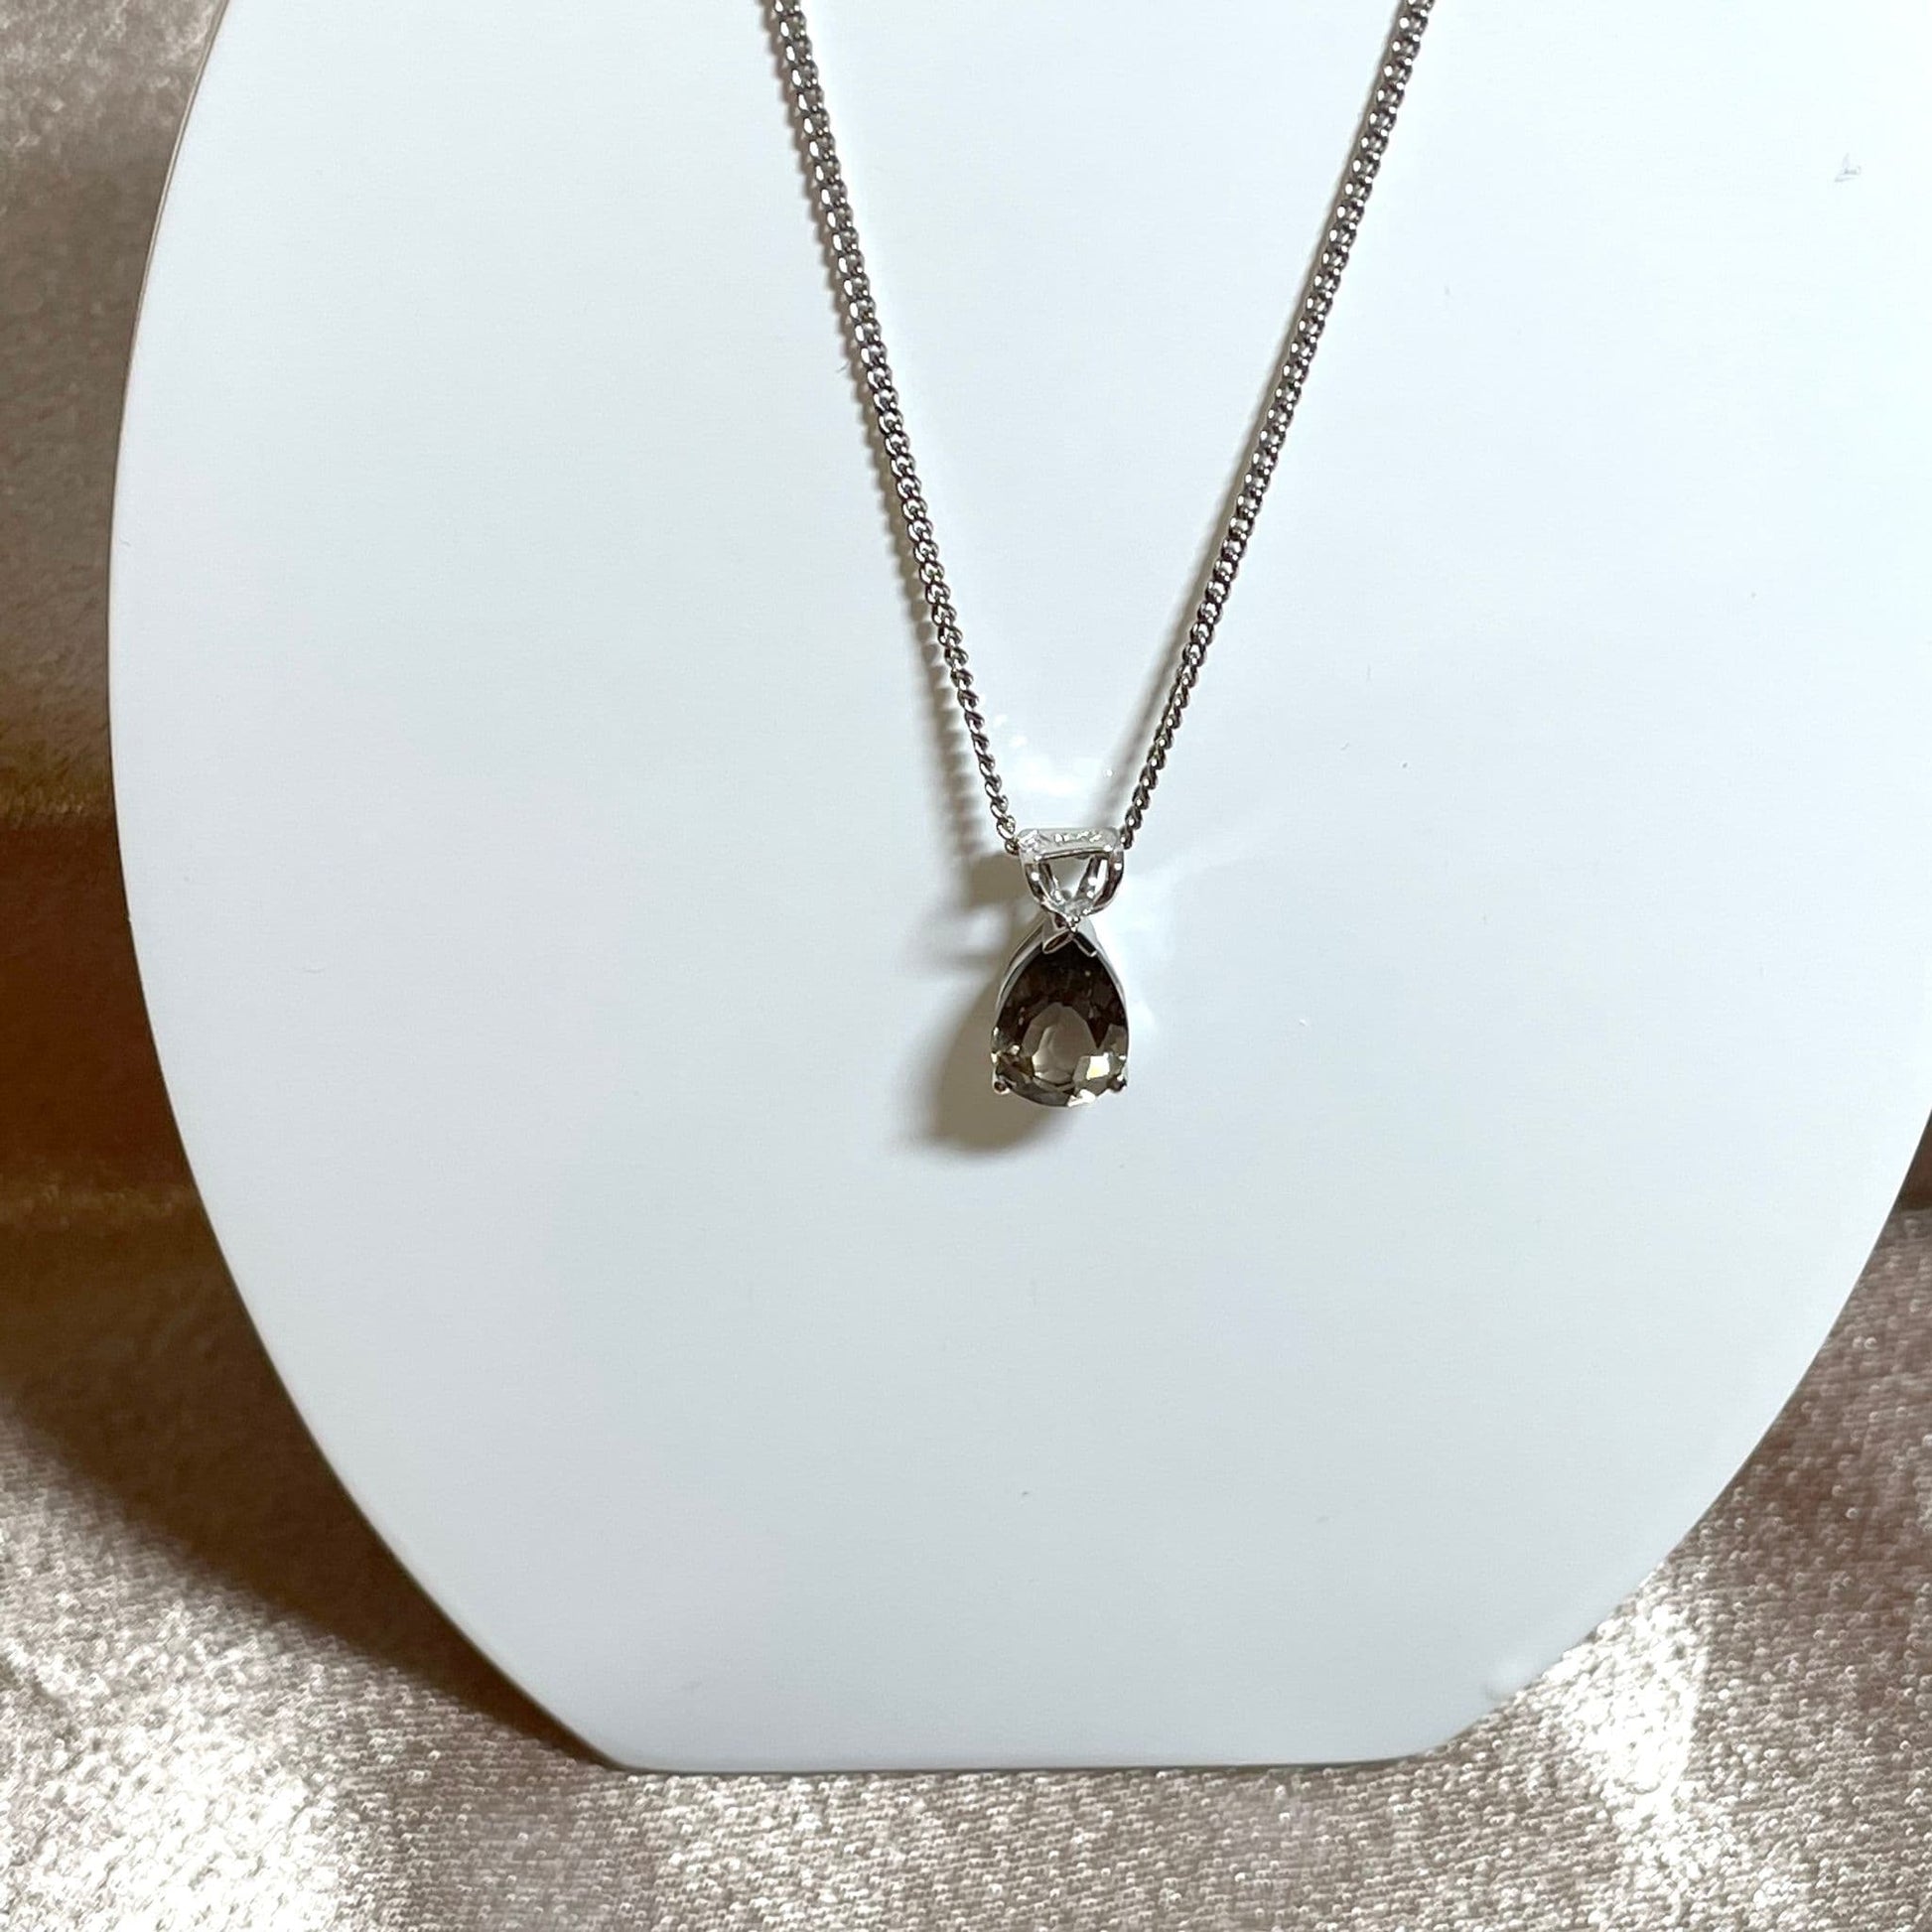 Smoky quartz white gold pear teardrop necklace